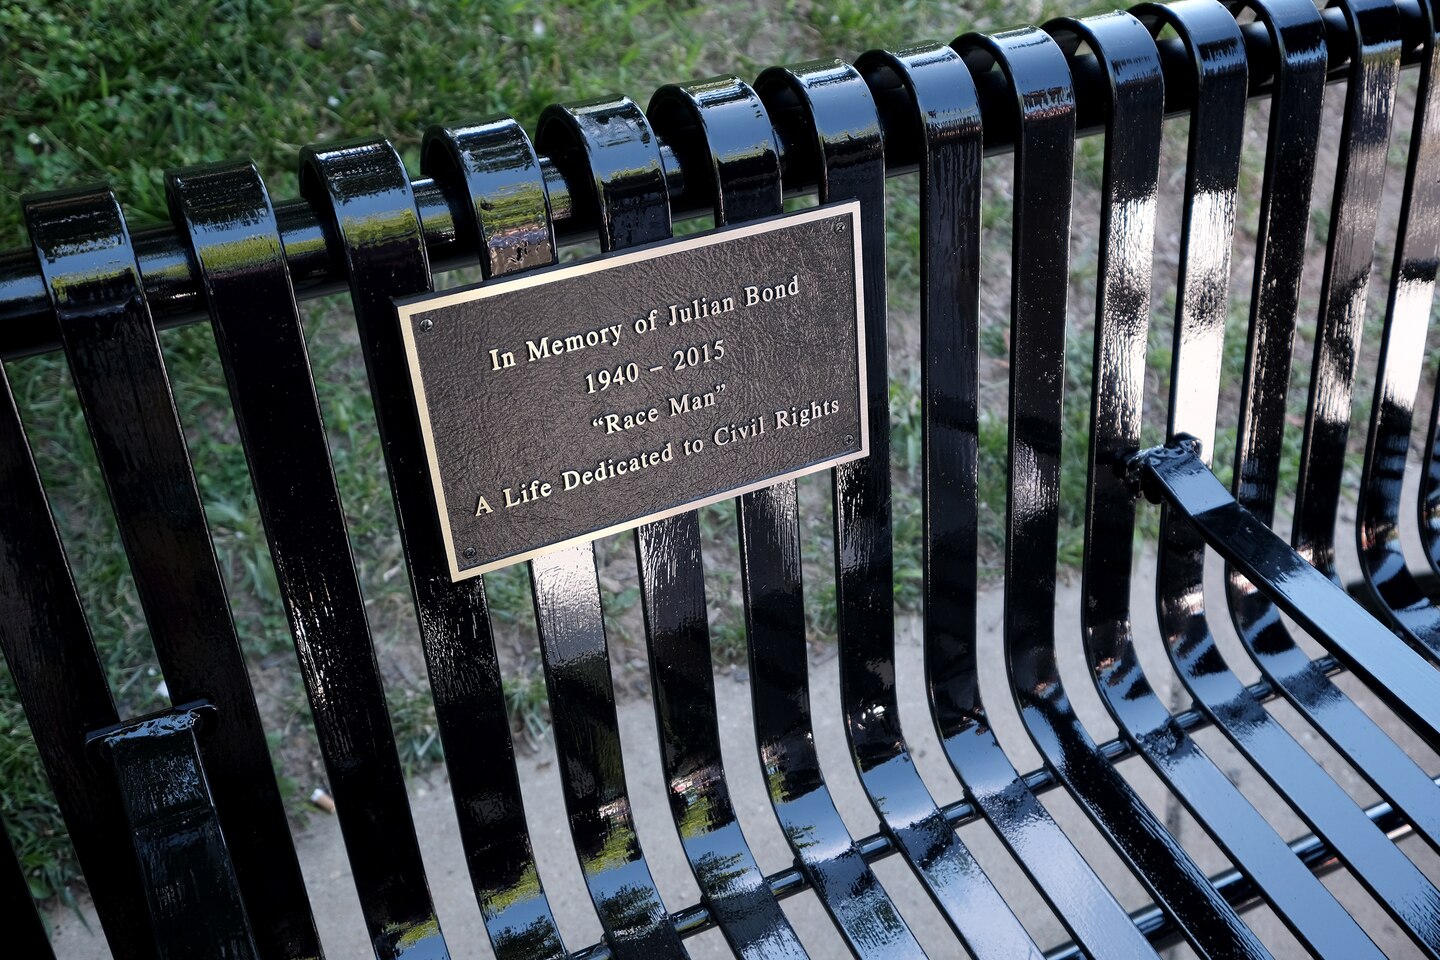 The bench's plaque that memorializes civil rights leader, Julian Bond. 